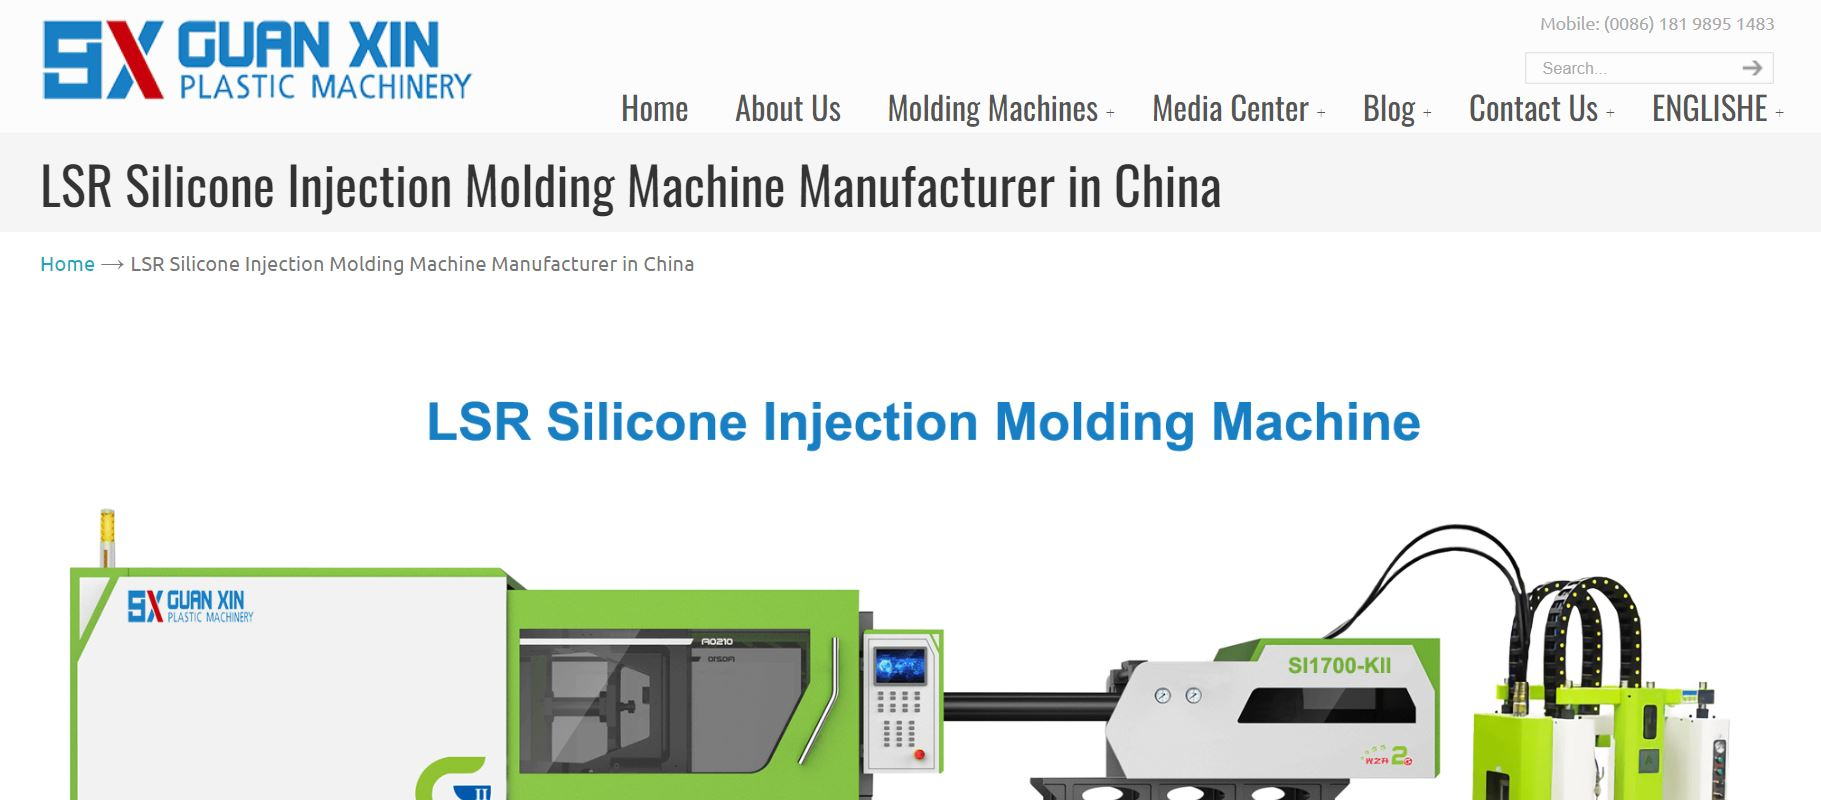 Guanxin Plastic Machinery Co., Ltd.